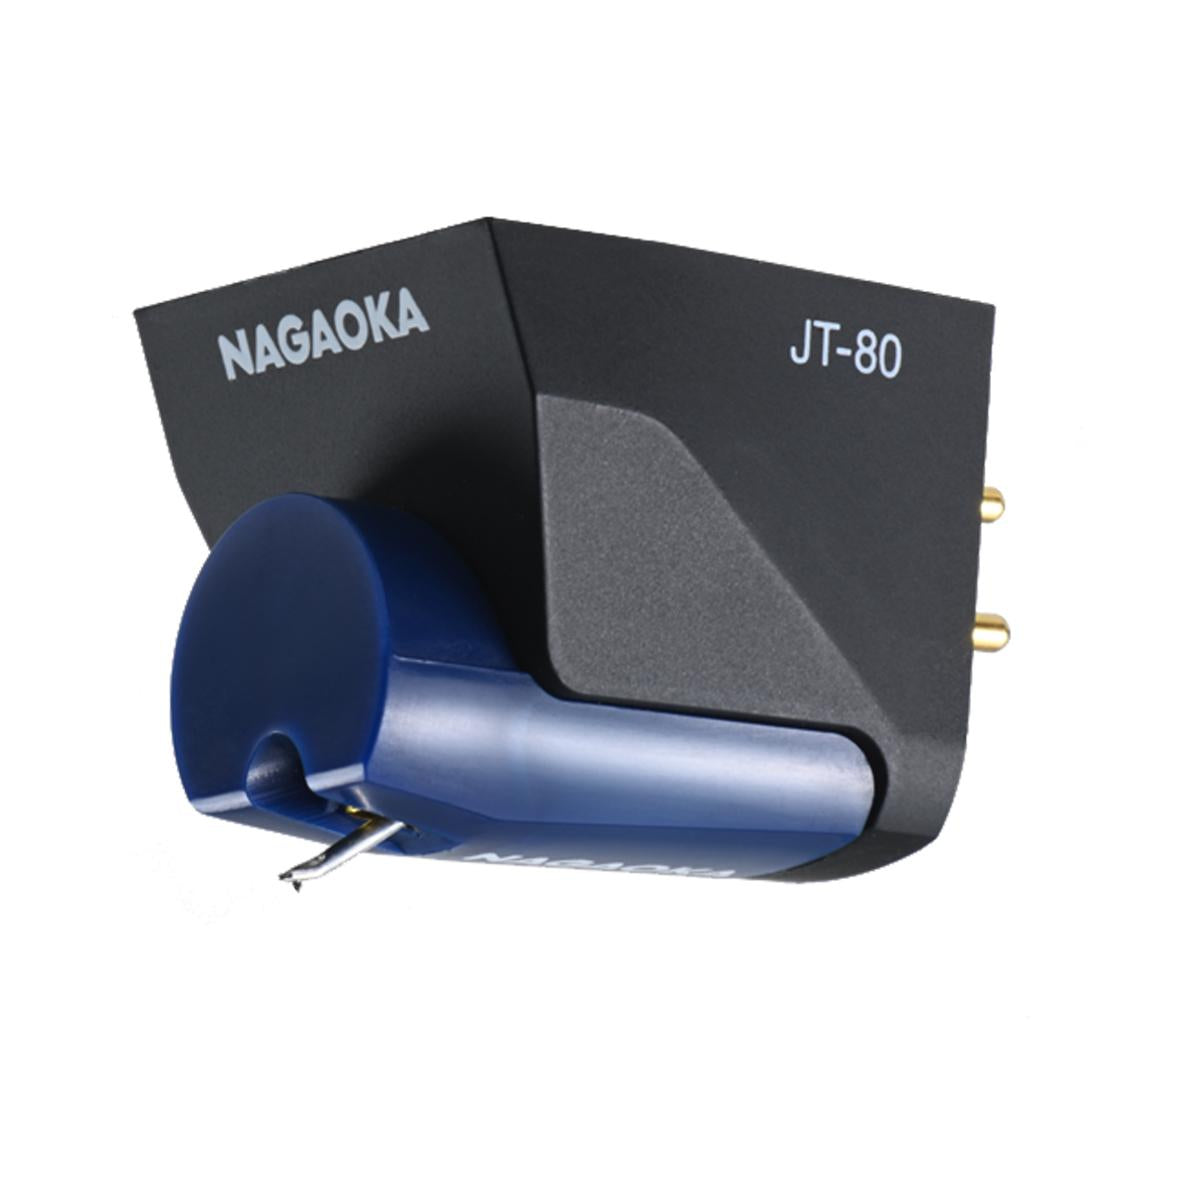 Nagaoka JT-80LB Stereo Moving Magnet Cartridge